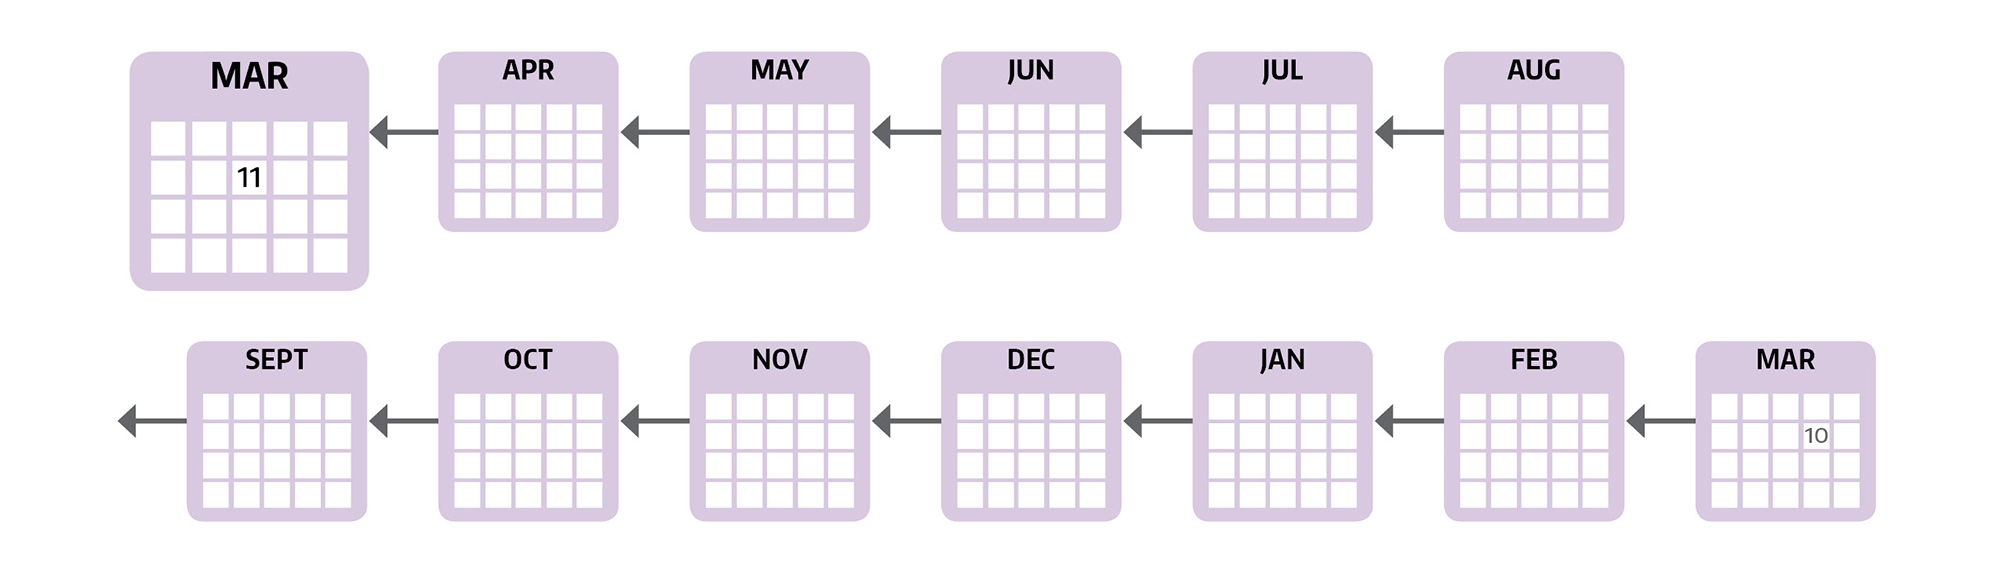 FMLA calendar Graphic 1